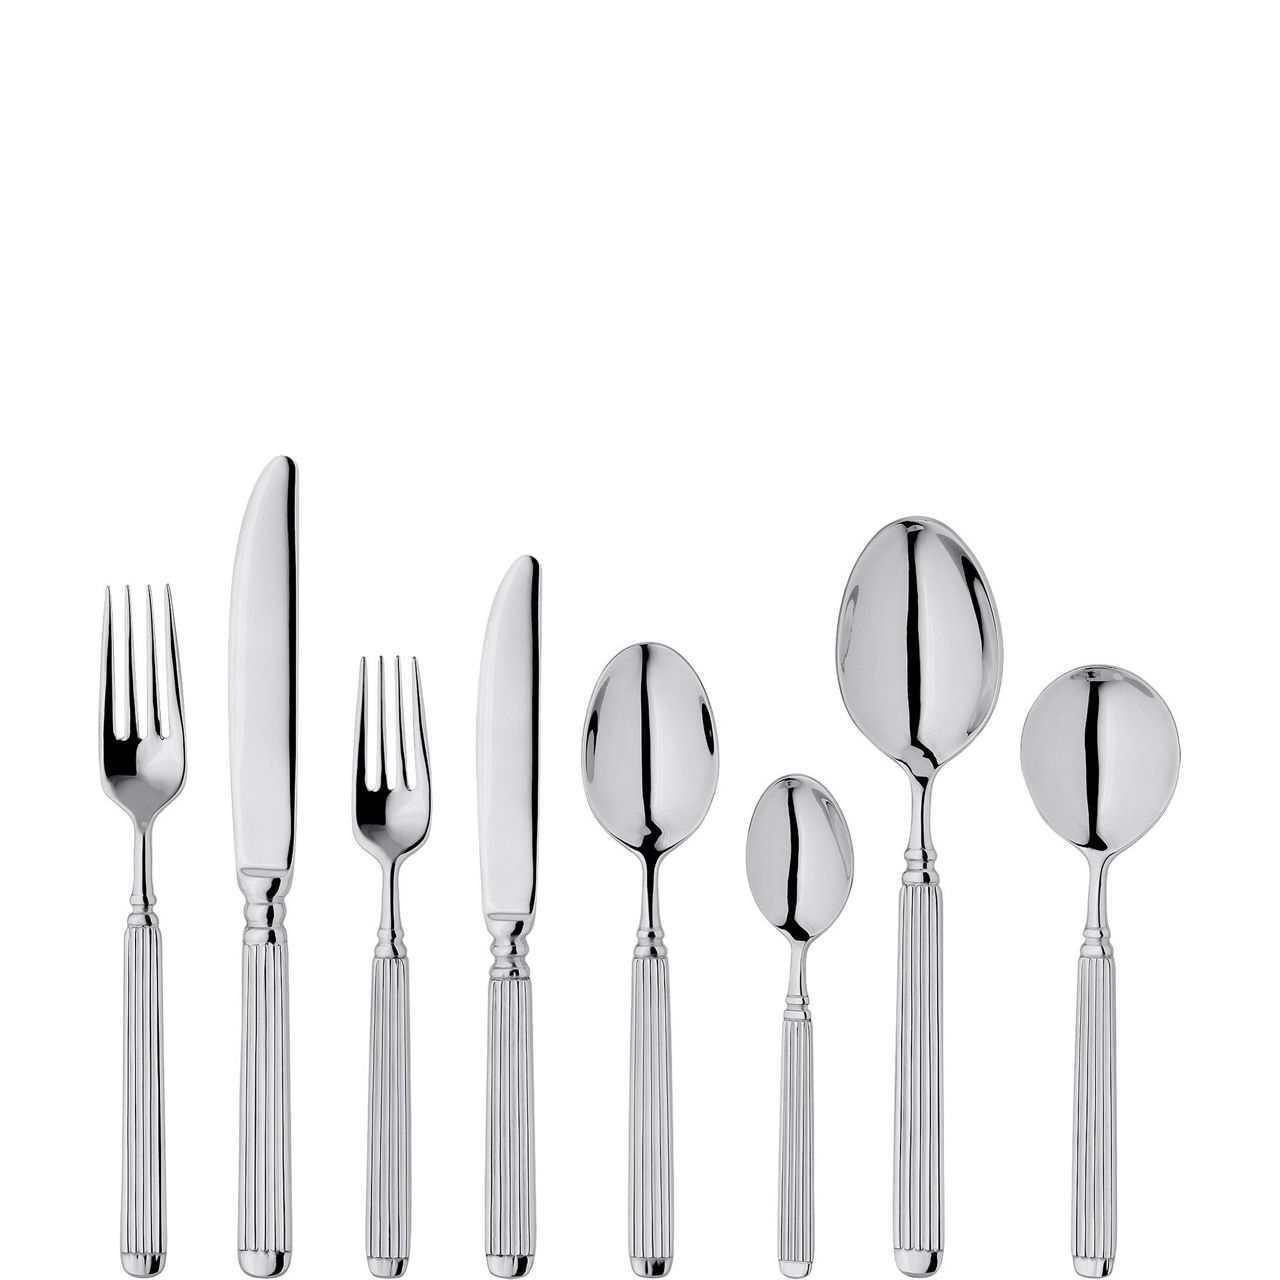 ROYAL DOULTON 16pc Gordon Ramsay Cutlery Set, Inc: Teaspoons